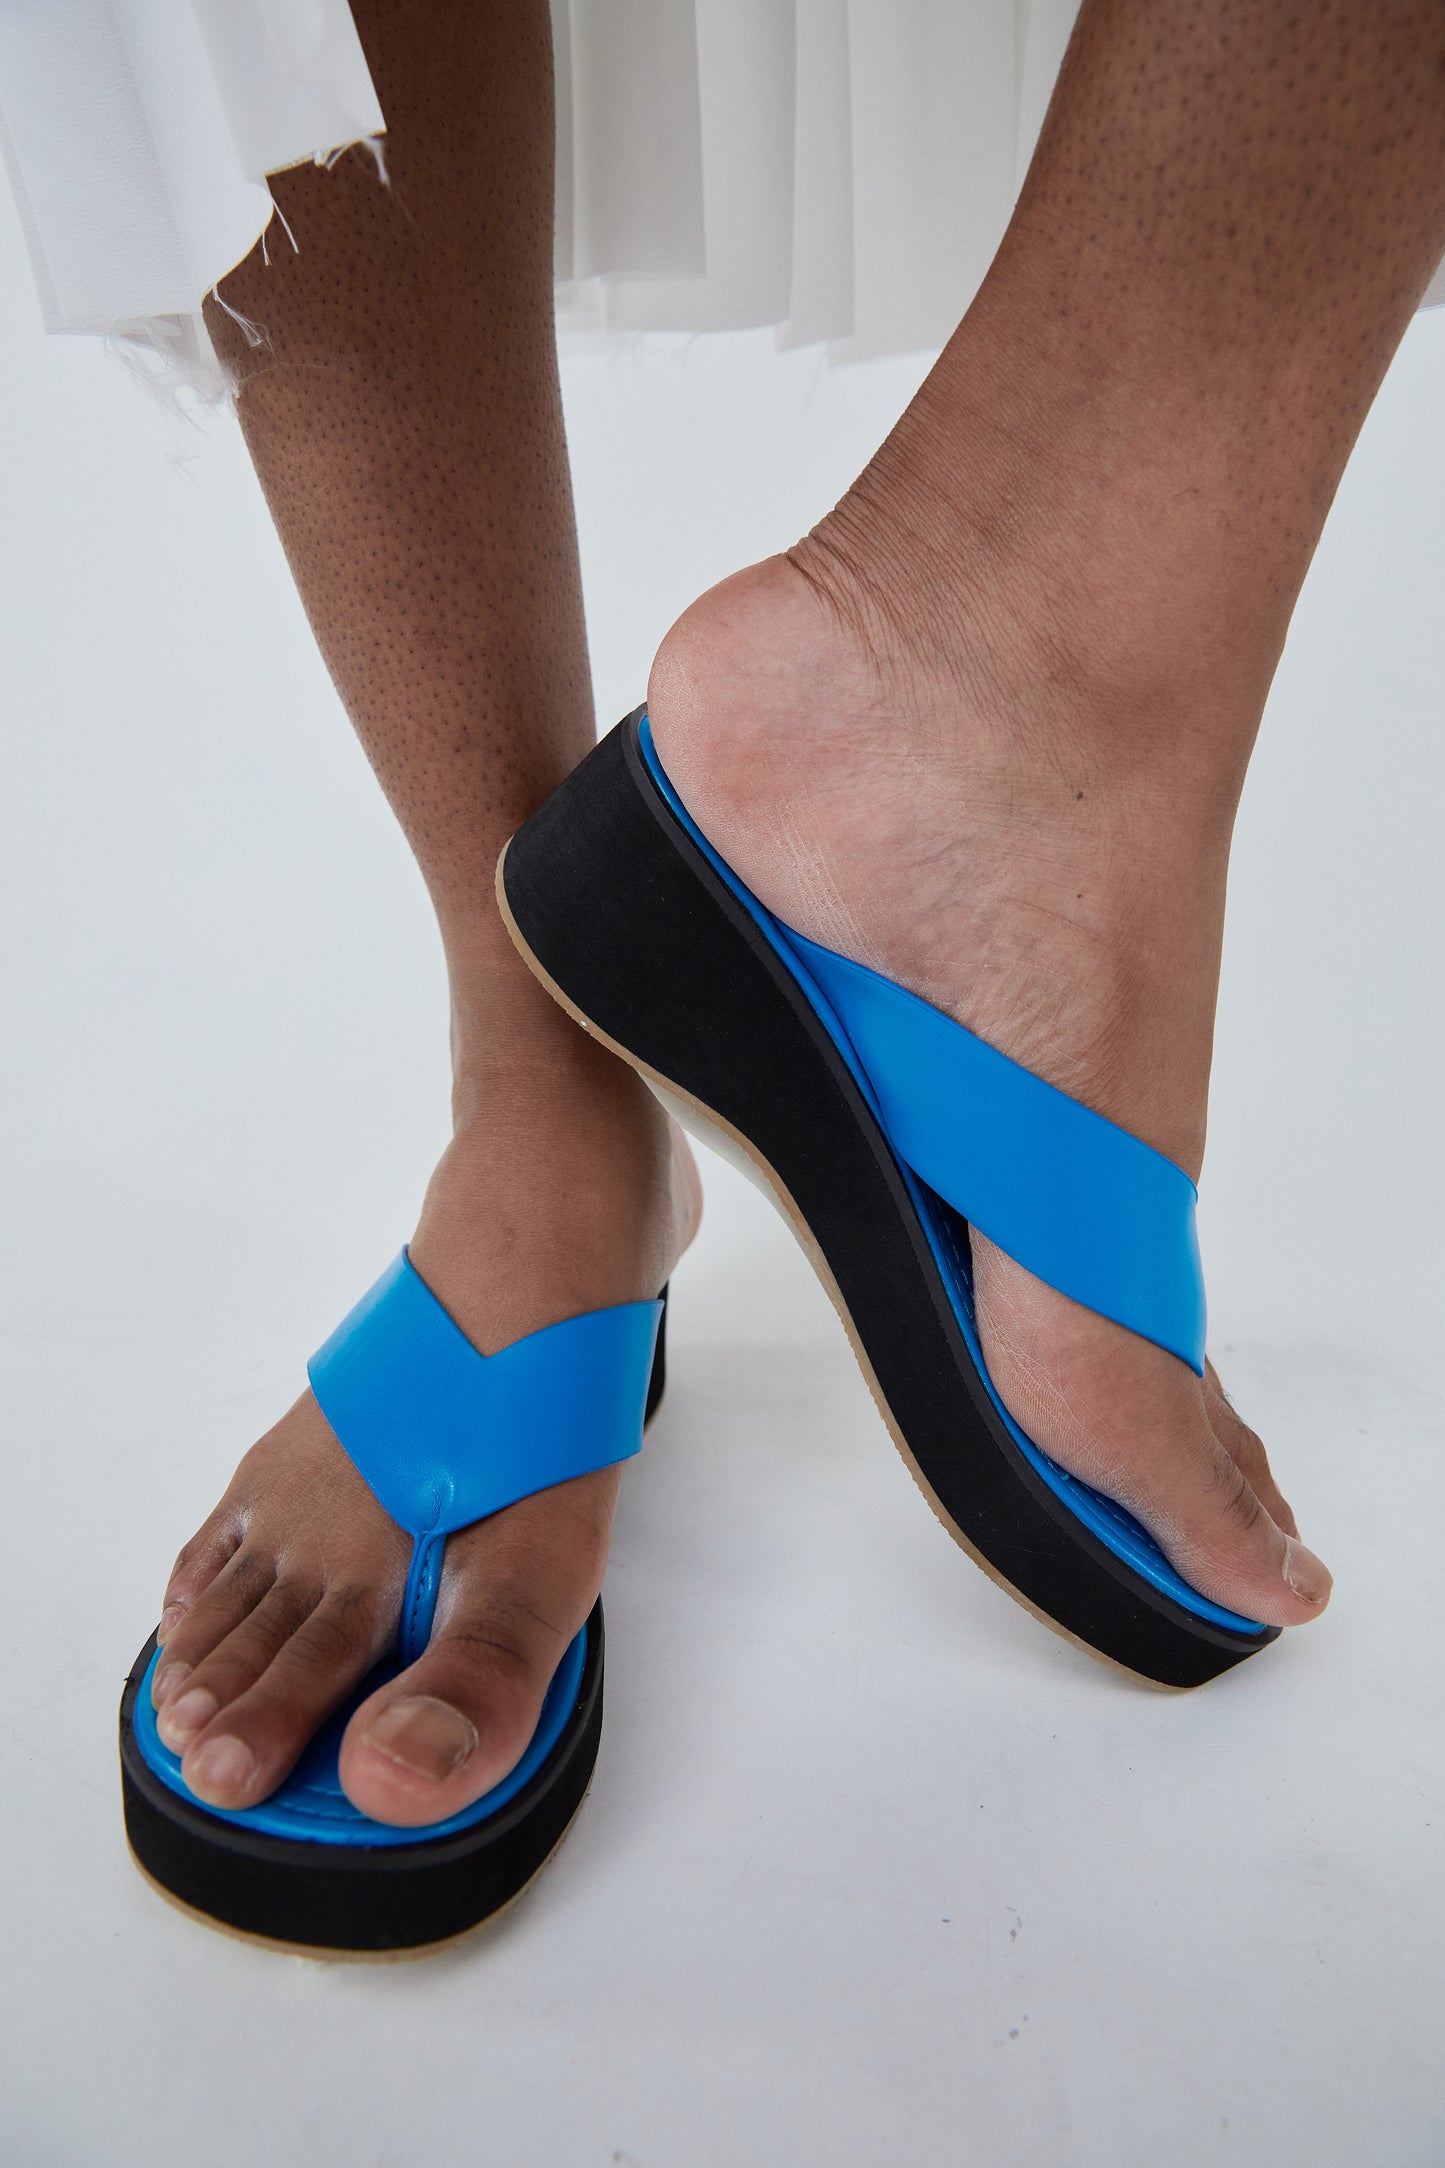 Platform Wedge Sandals, Ocean Blue